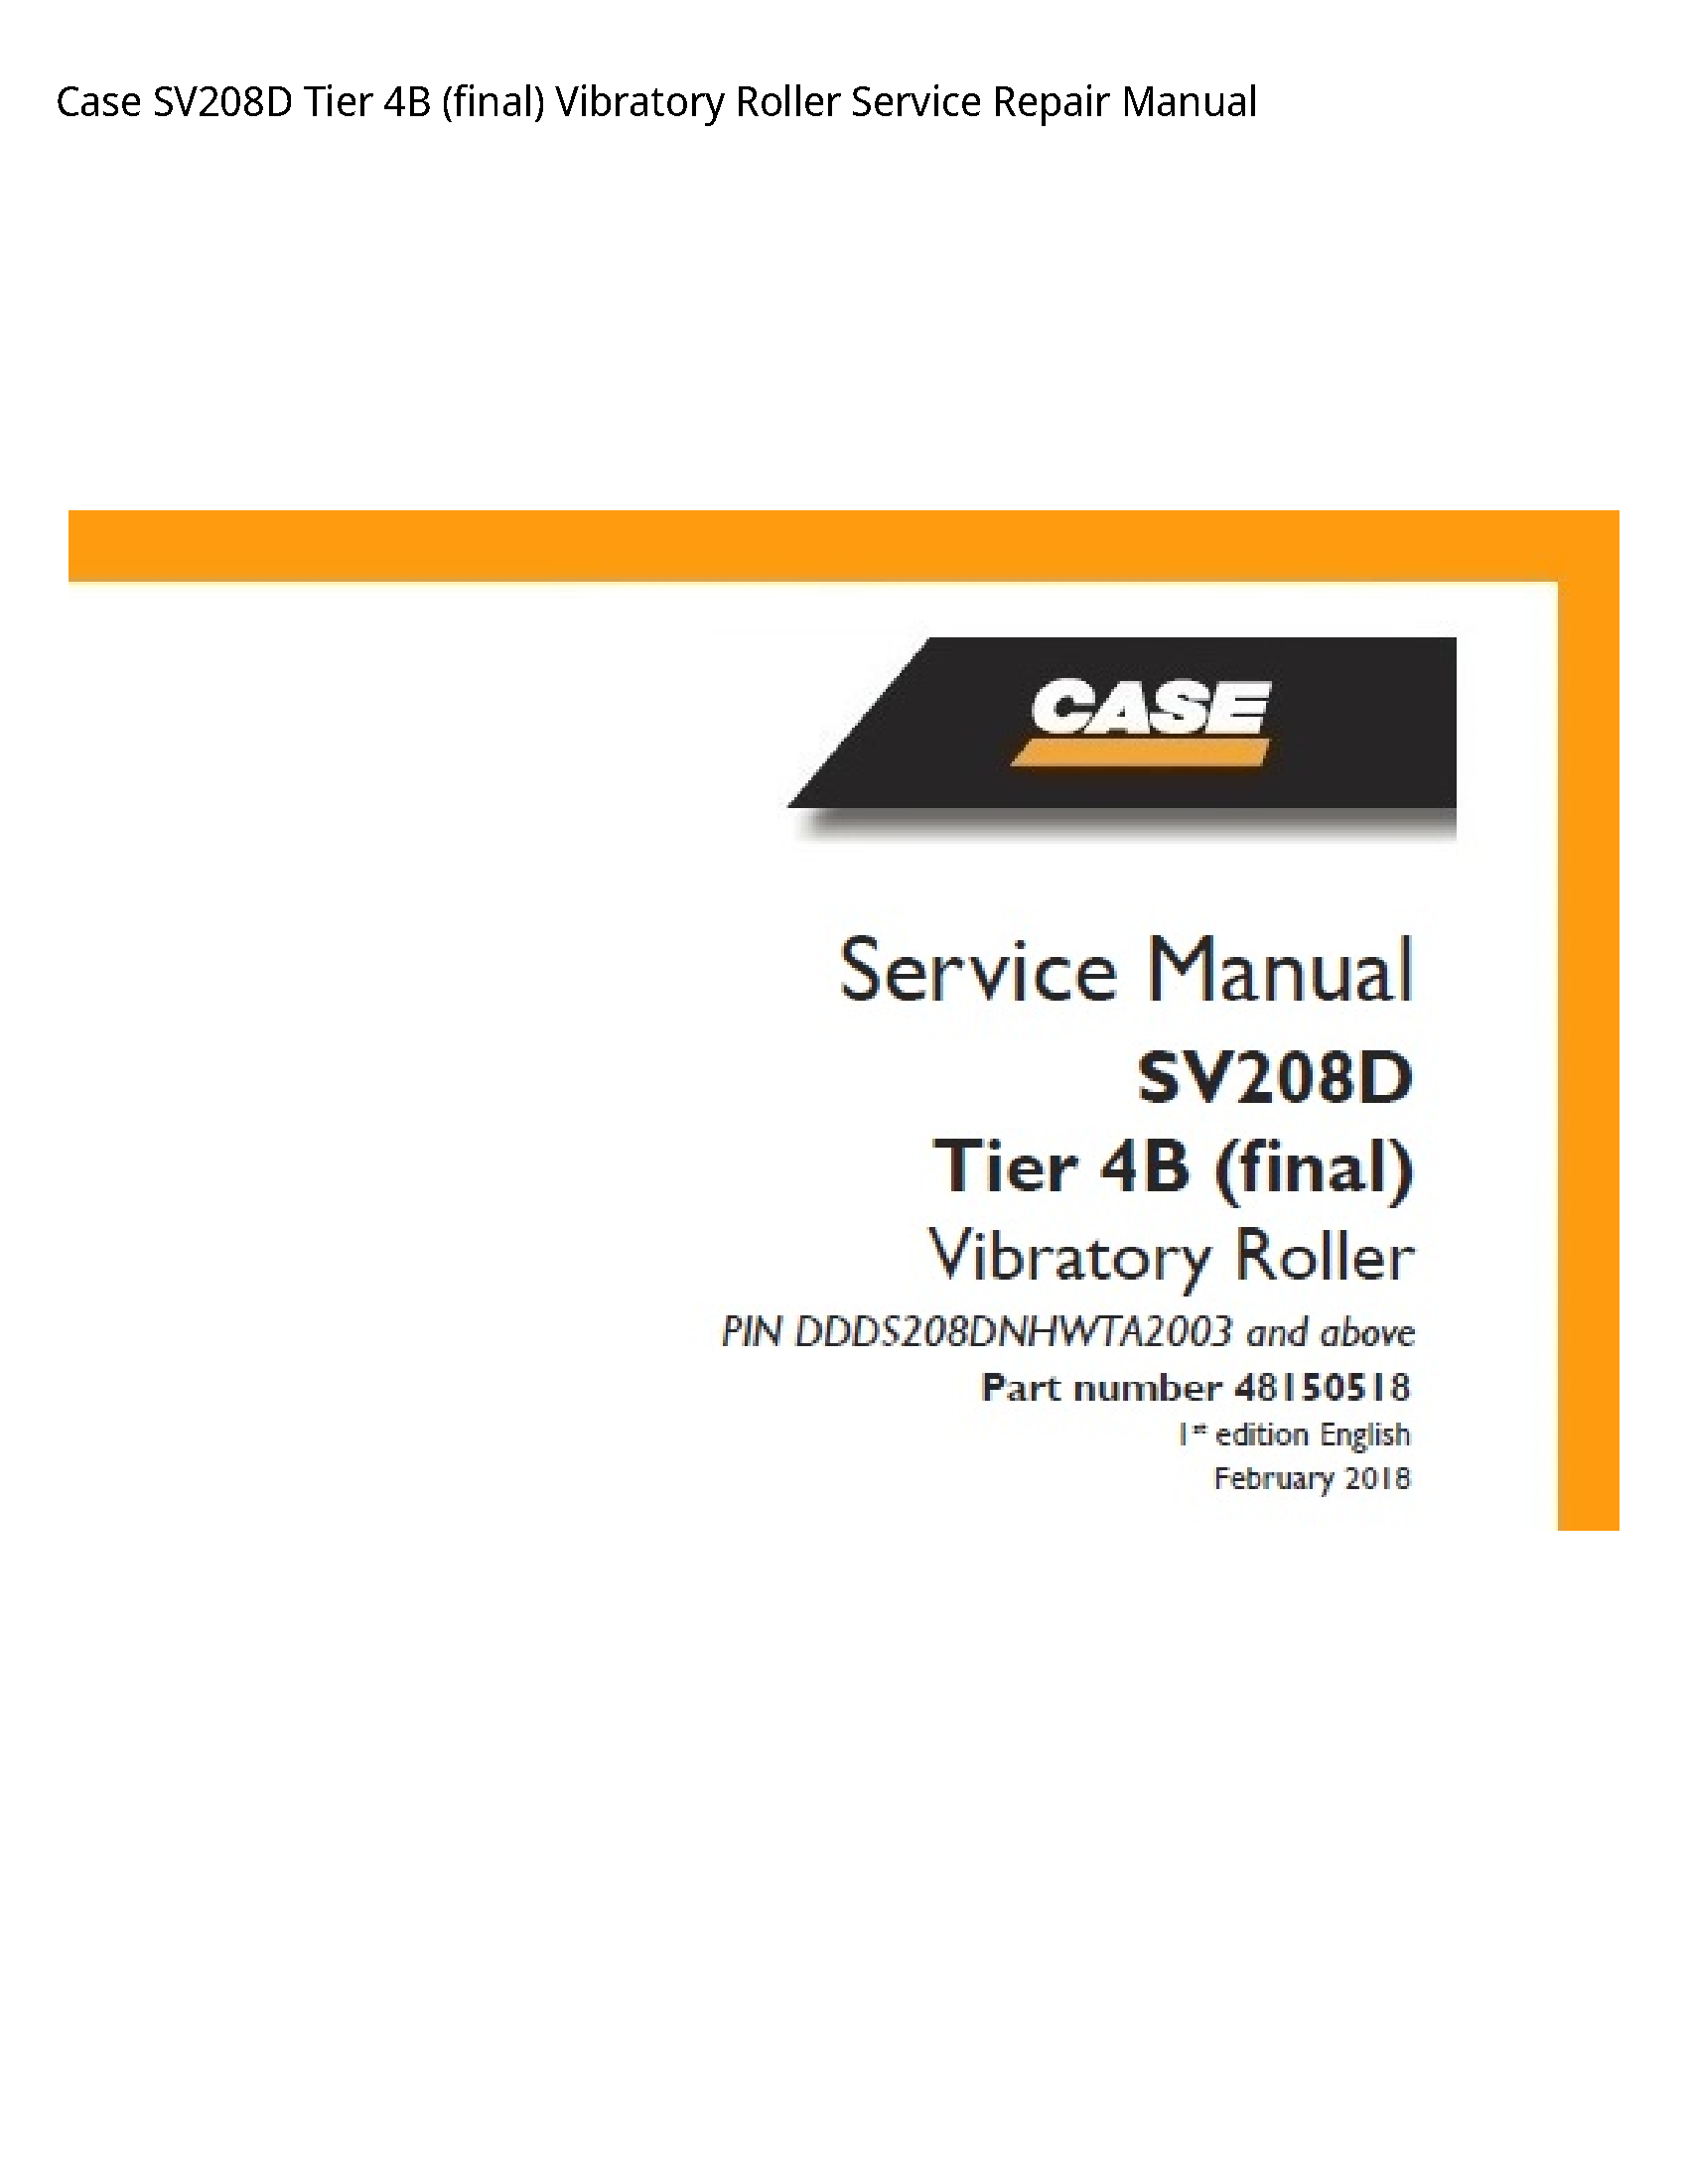 Case/Case IH SV208D Tier (final) Vibratory Roller manual